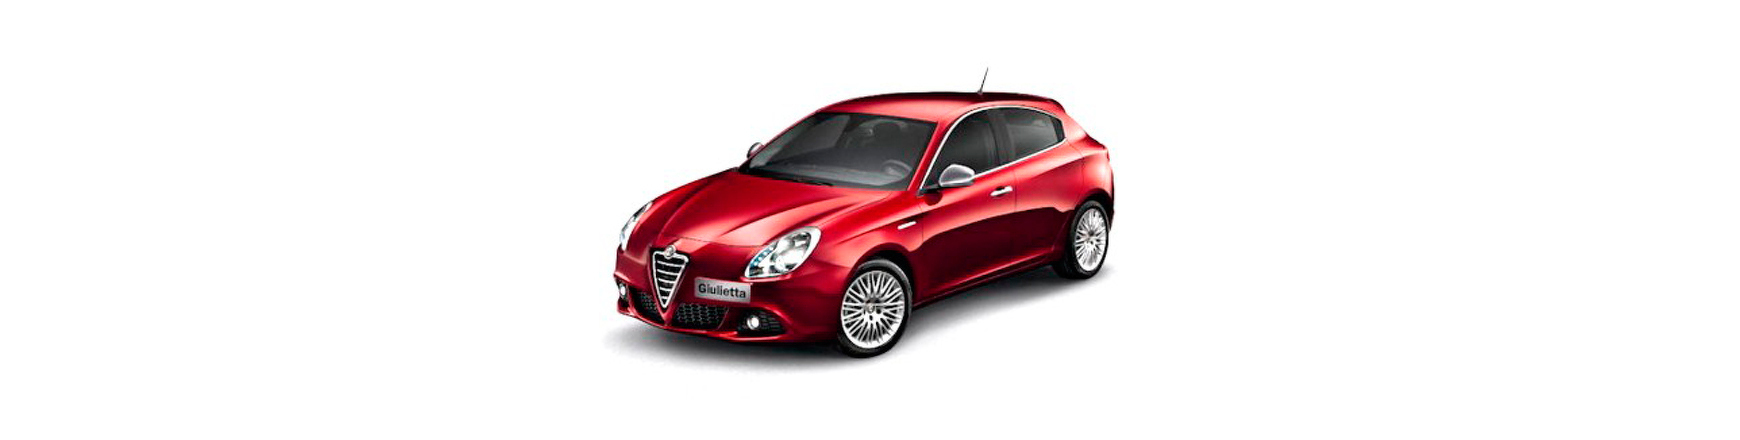 Alfa Romeo Giulietta 2009 2010 2011 2012 2013 2014 2015